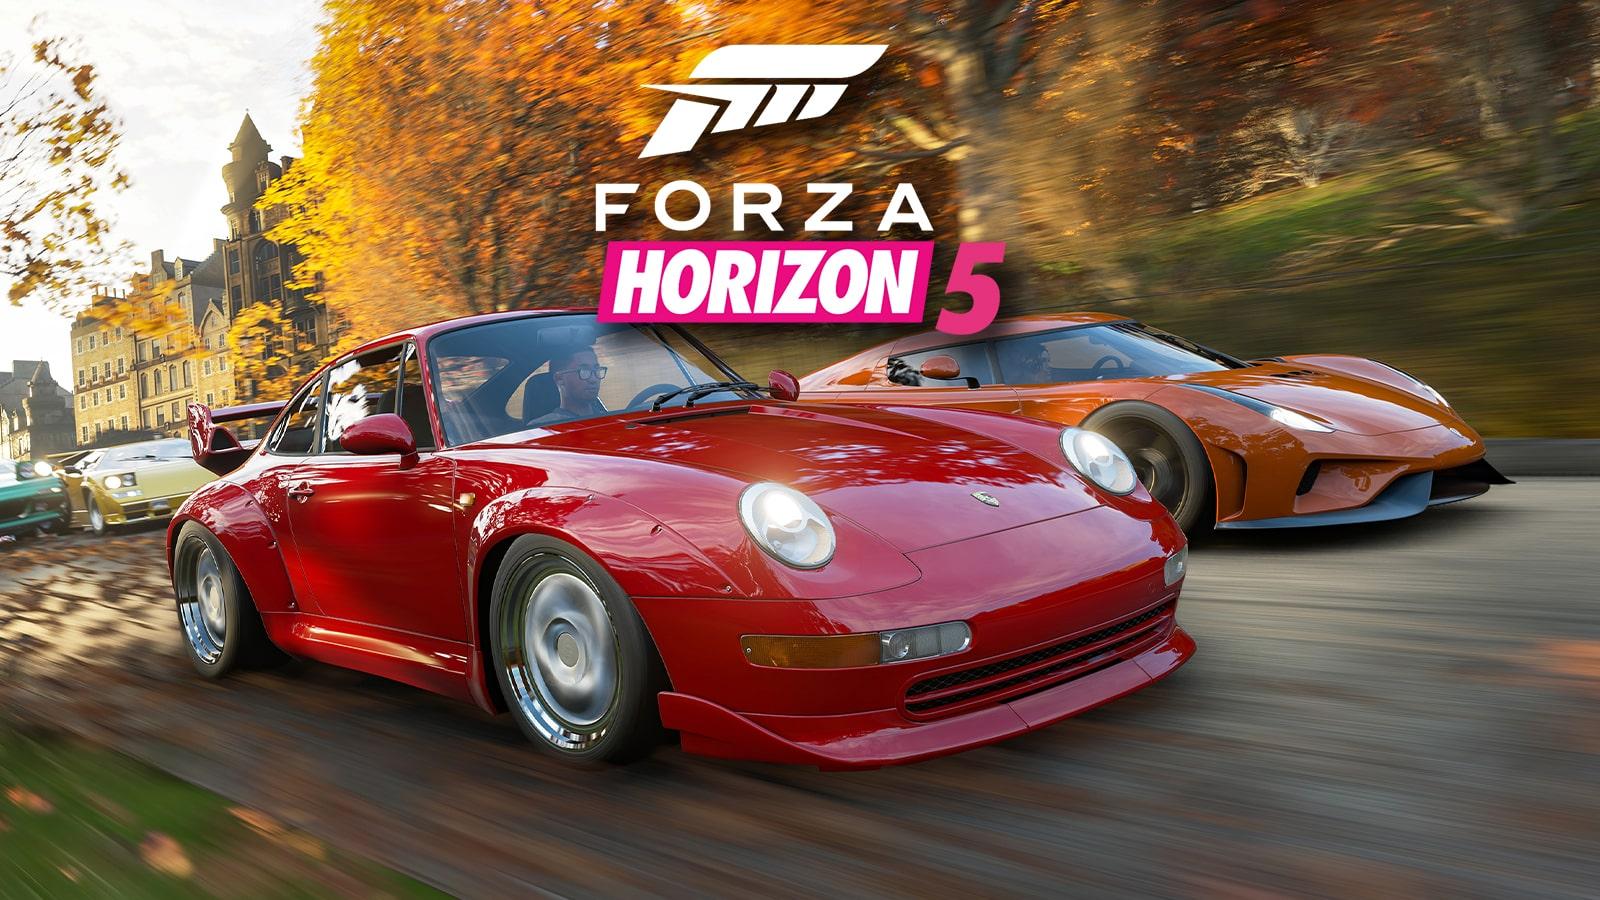 Is Forza Horizon 5 Cross-Platform?